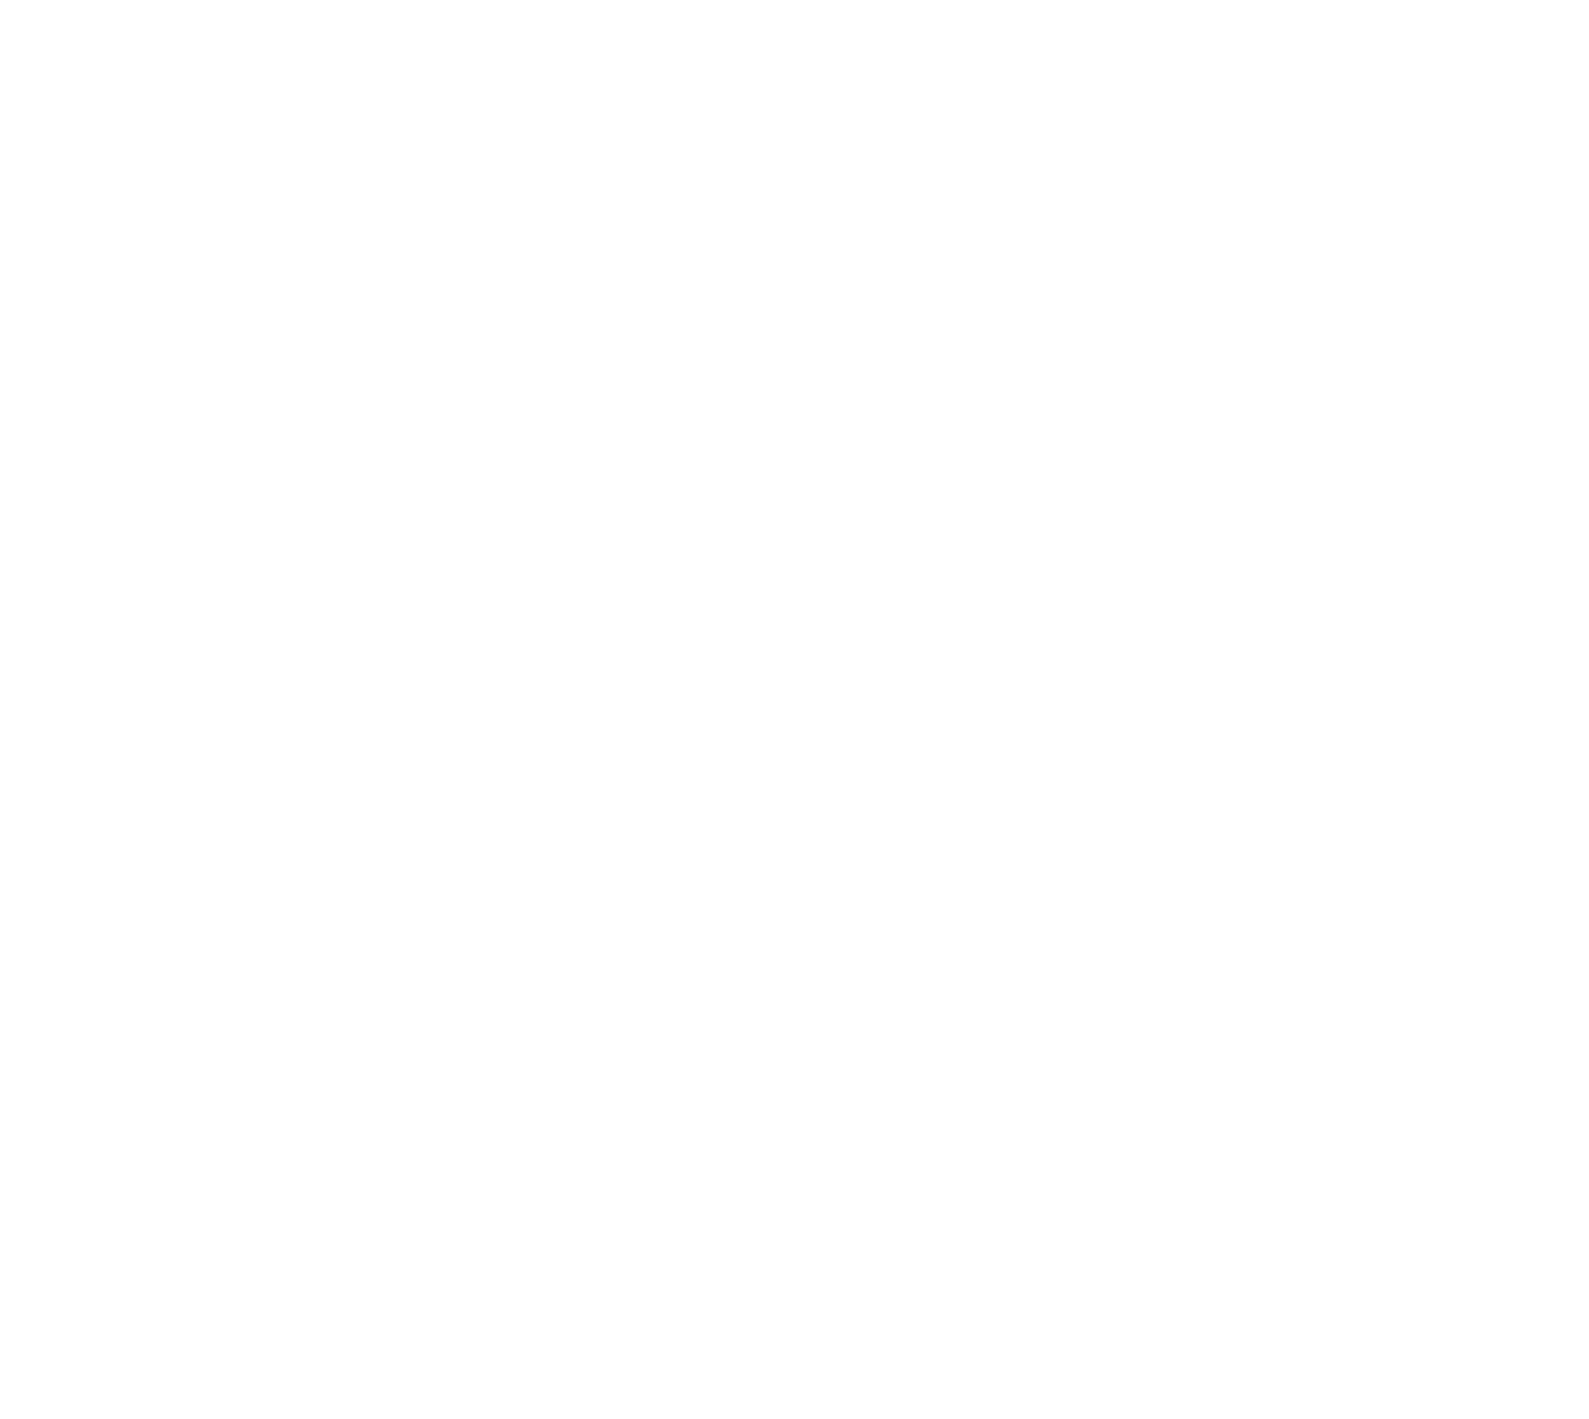 ArtPlusVideo